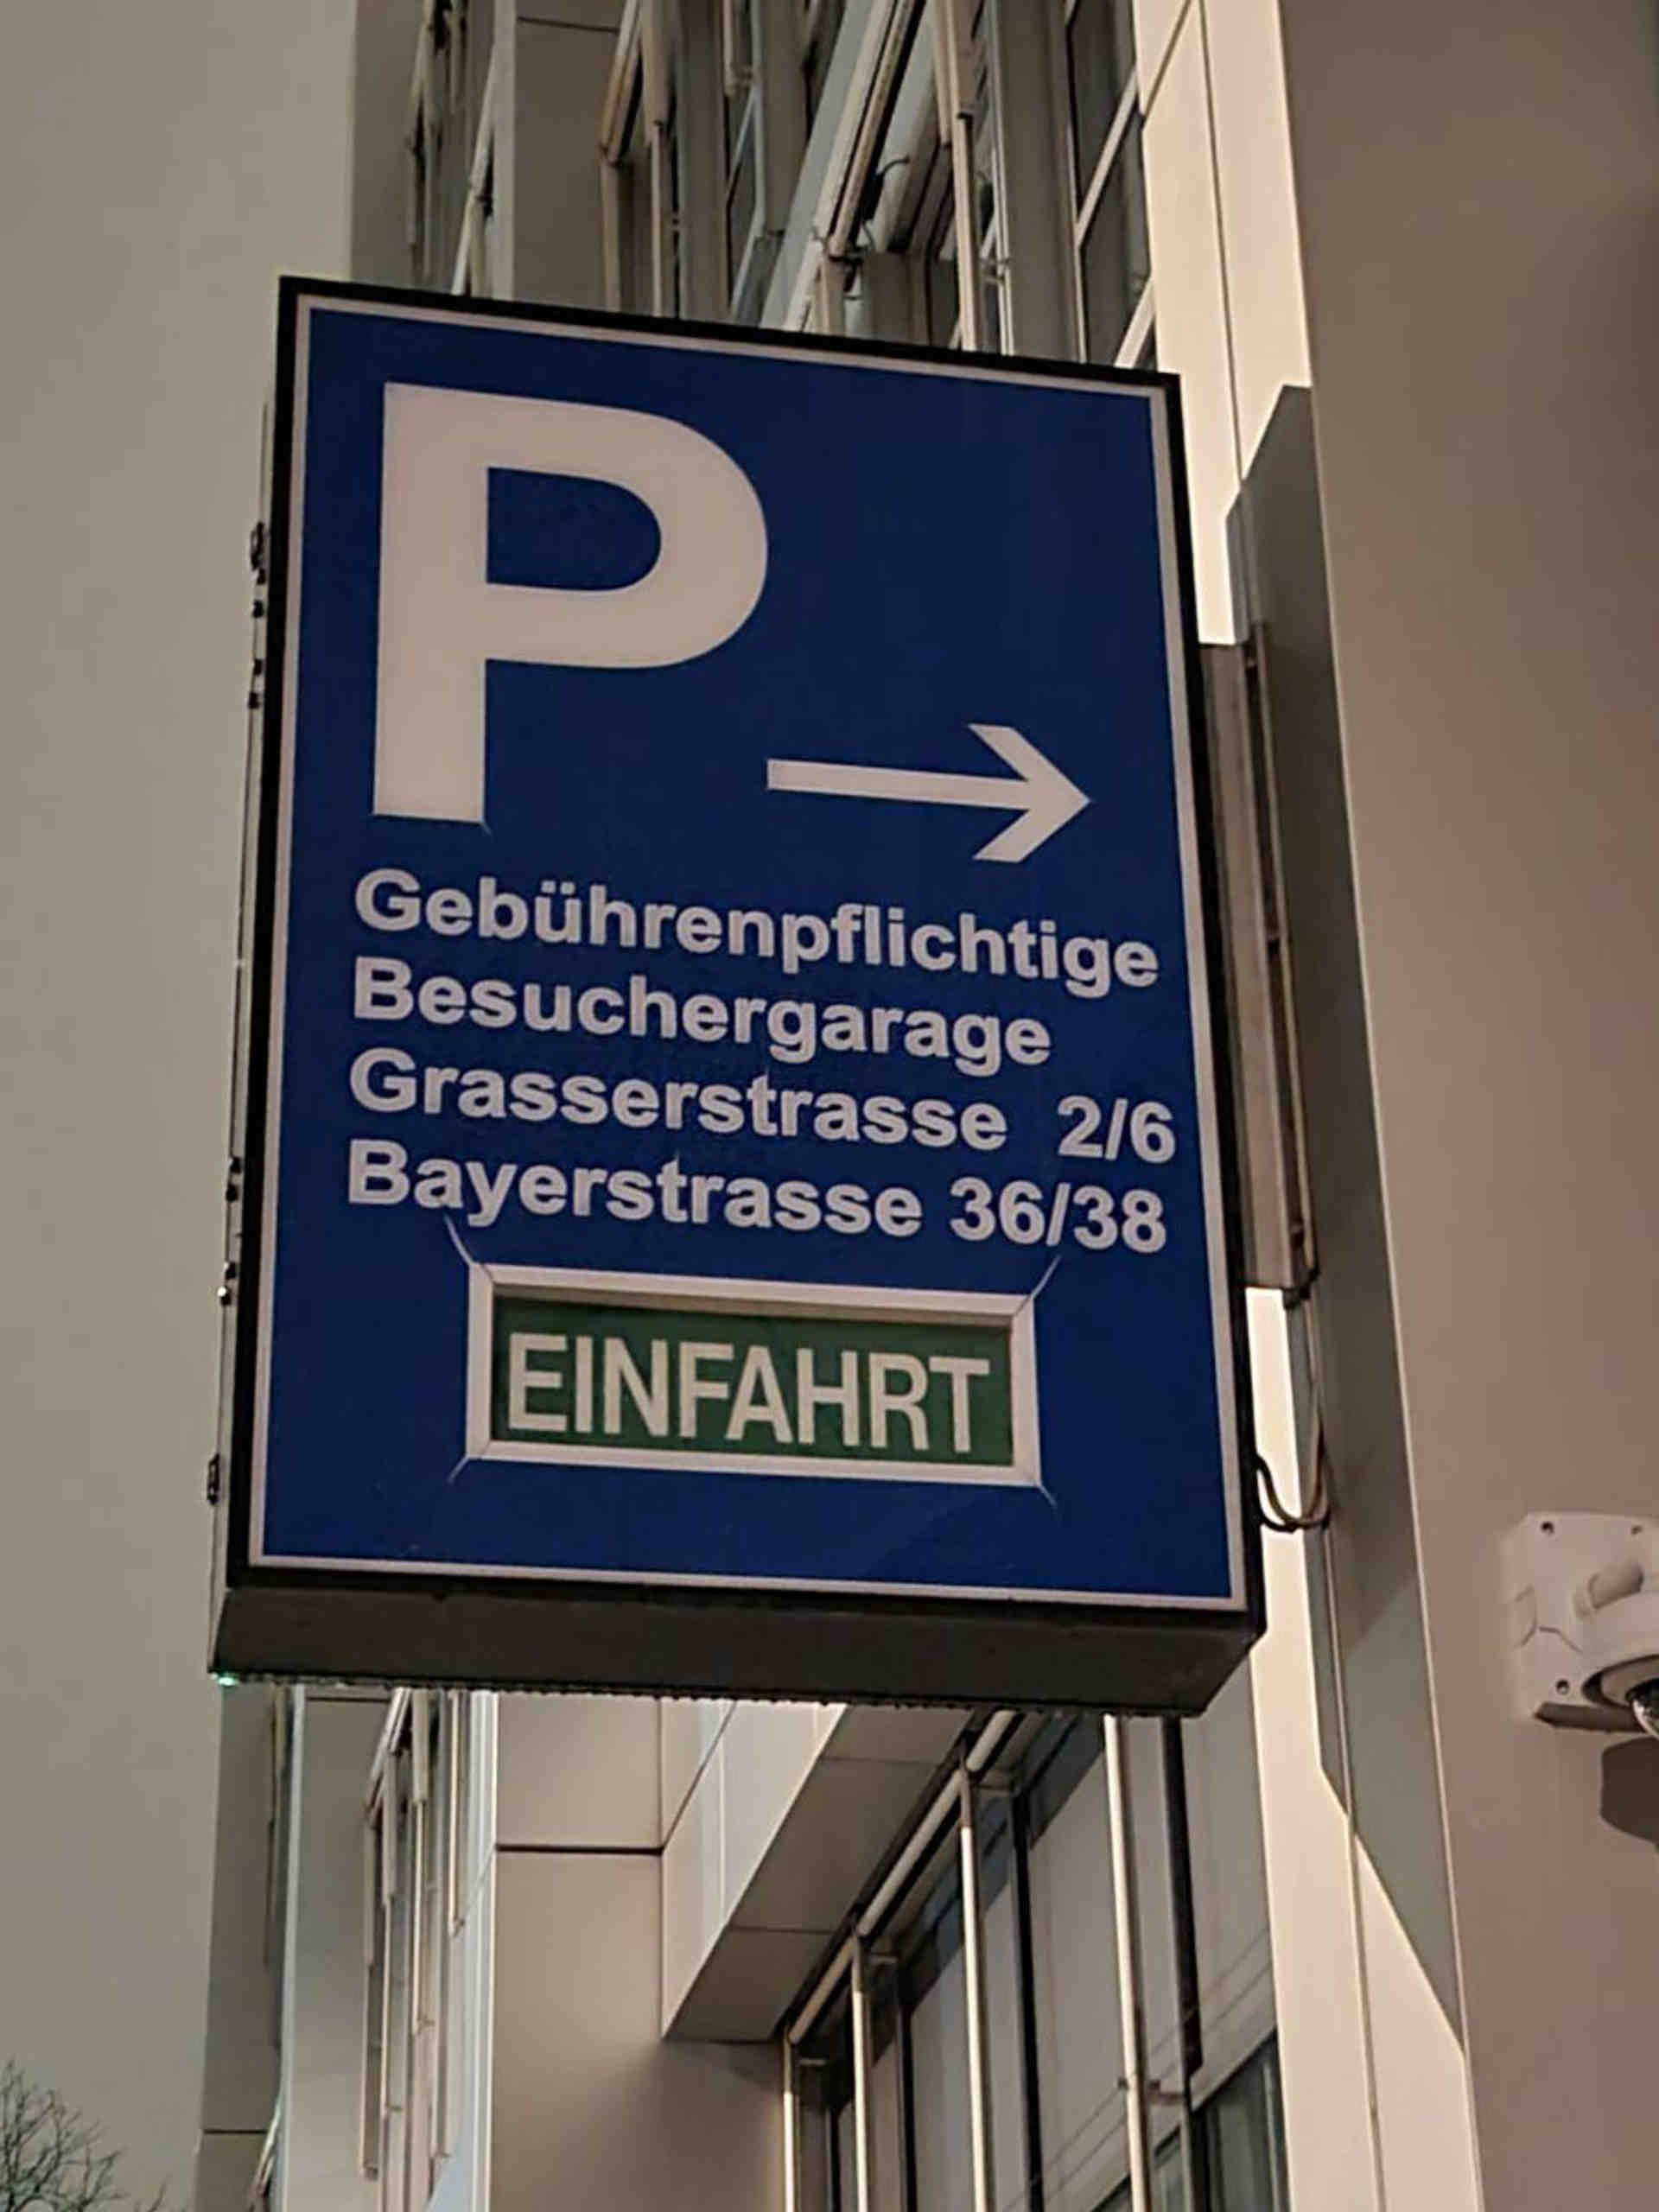 Spacious parking space, no duplex, 1st basement, most central location - Zollstraße, 80335 Munich - Photo 6 of 9